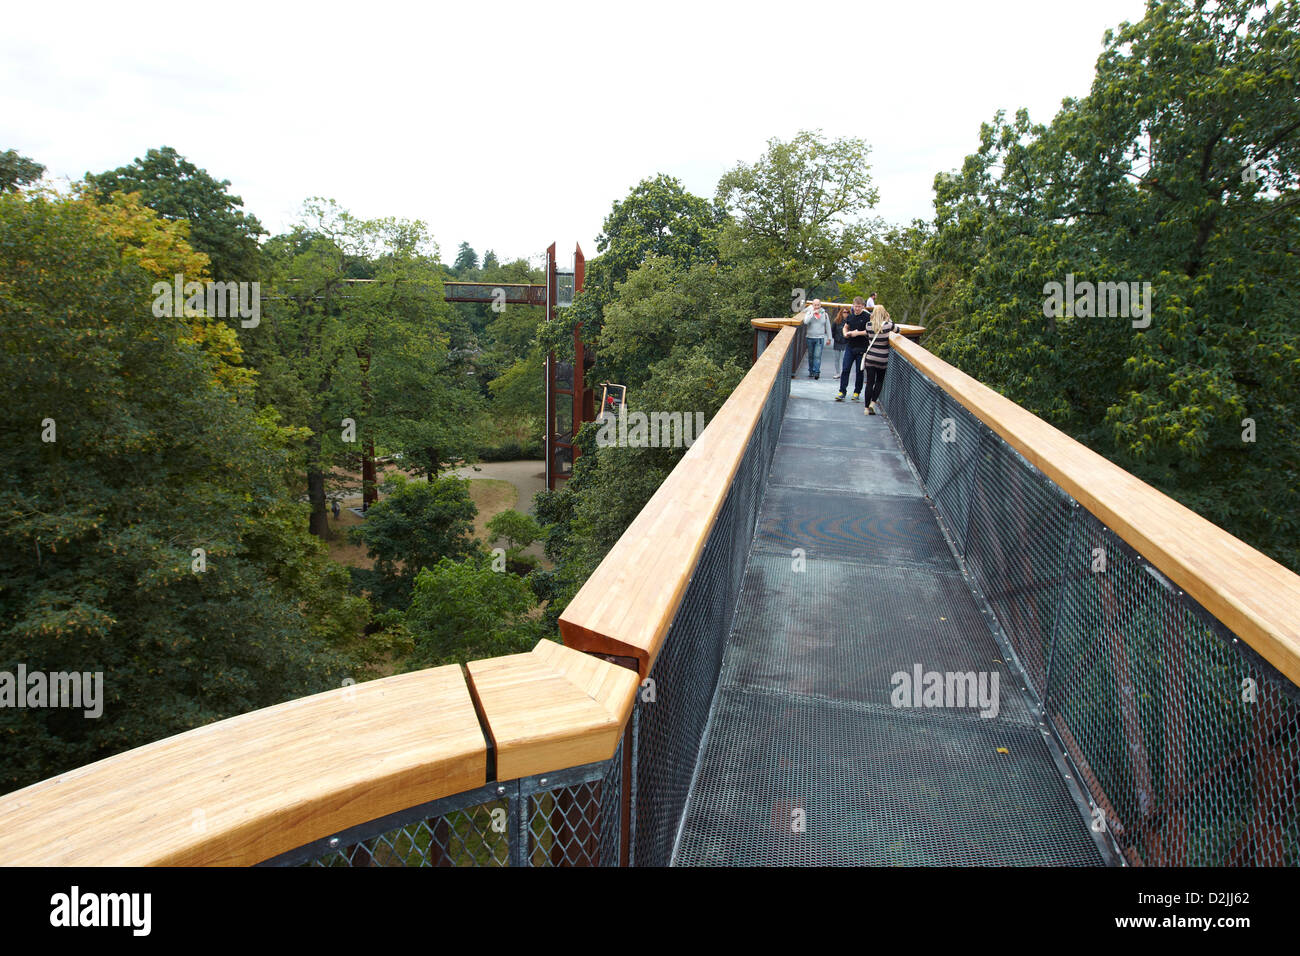 The rhizotron and xstrata treetop walkway, Kew Gardens, London, UK Stock Photo